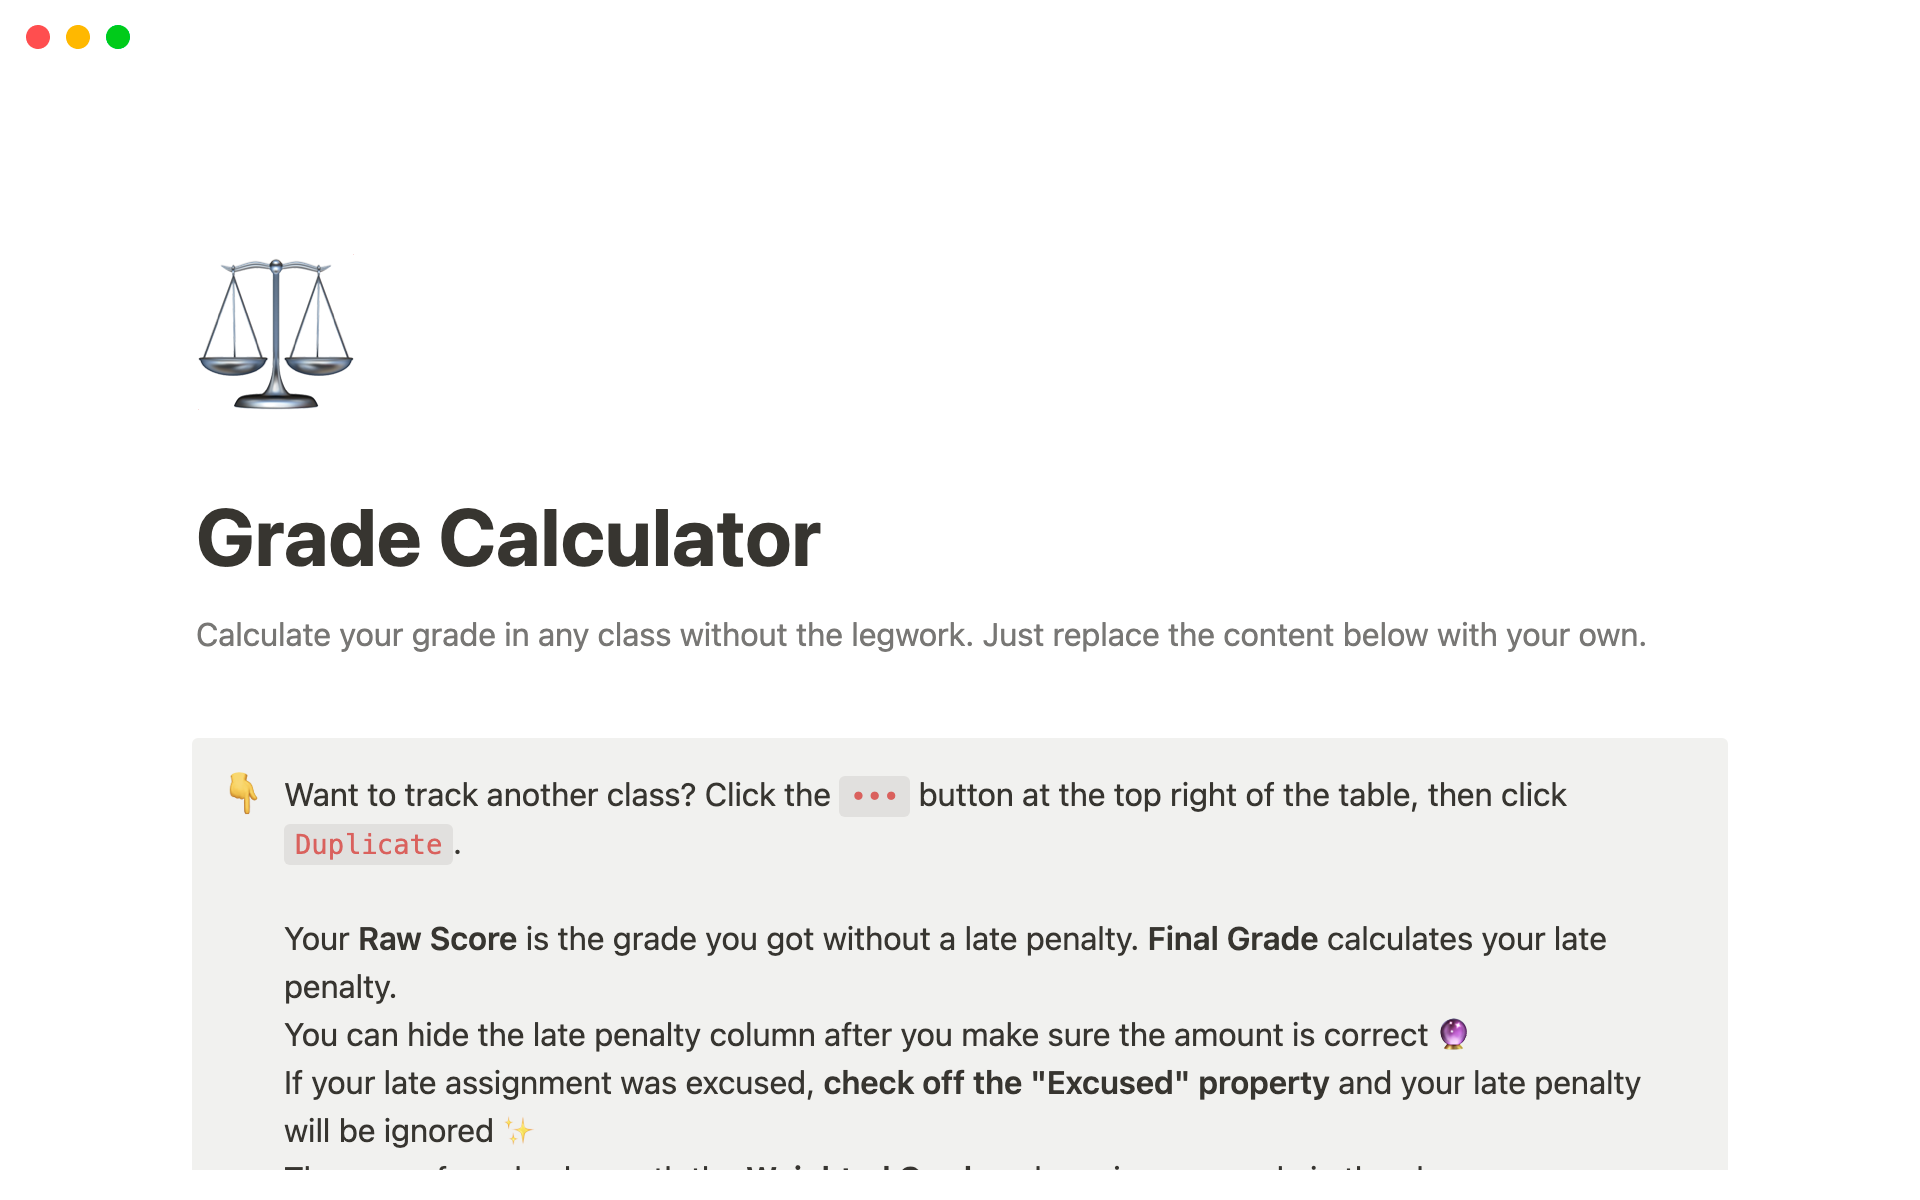 The desktop image for the Grade calculator template